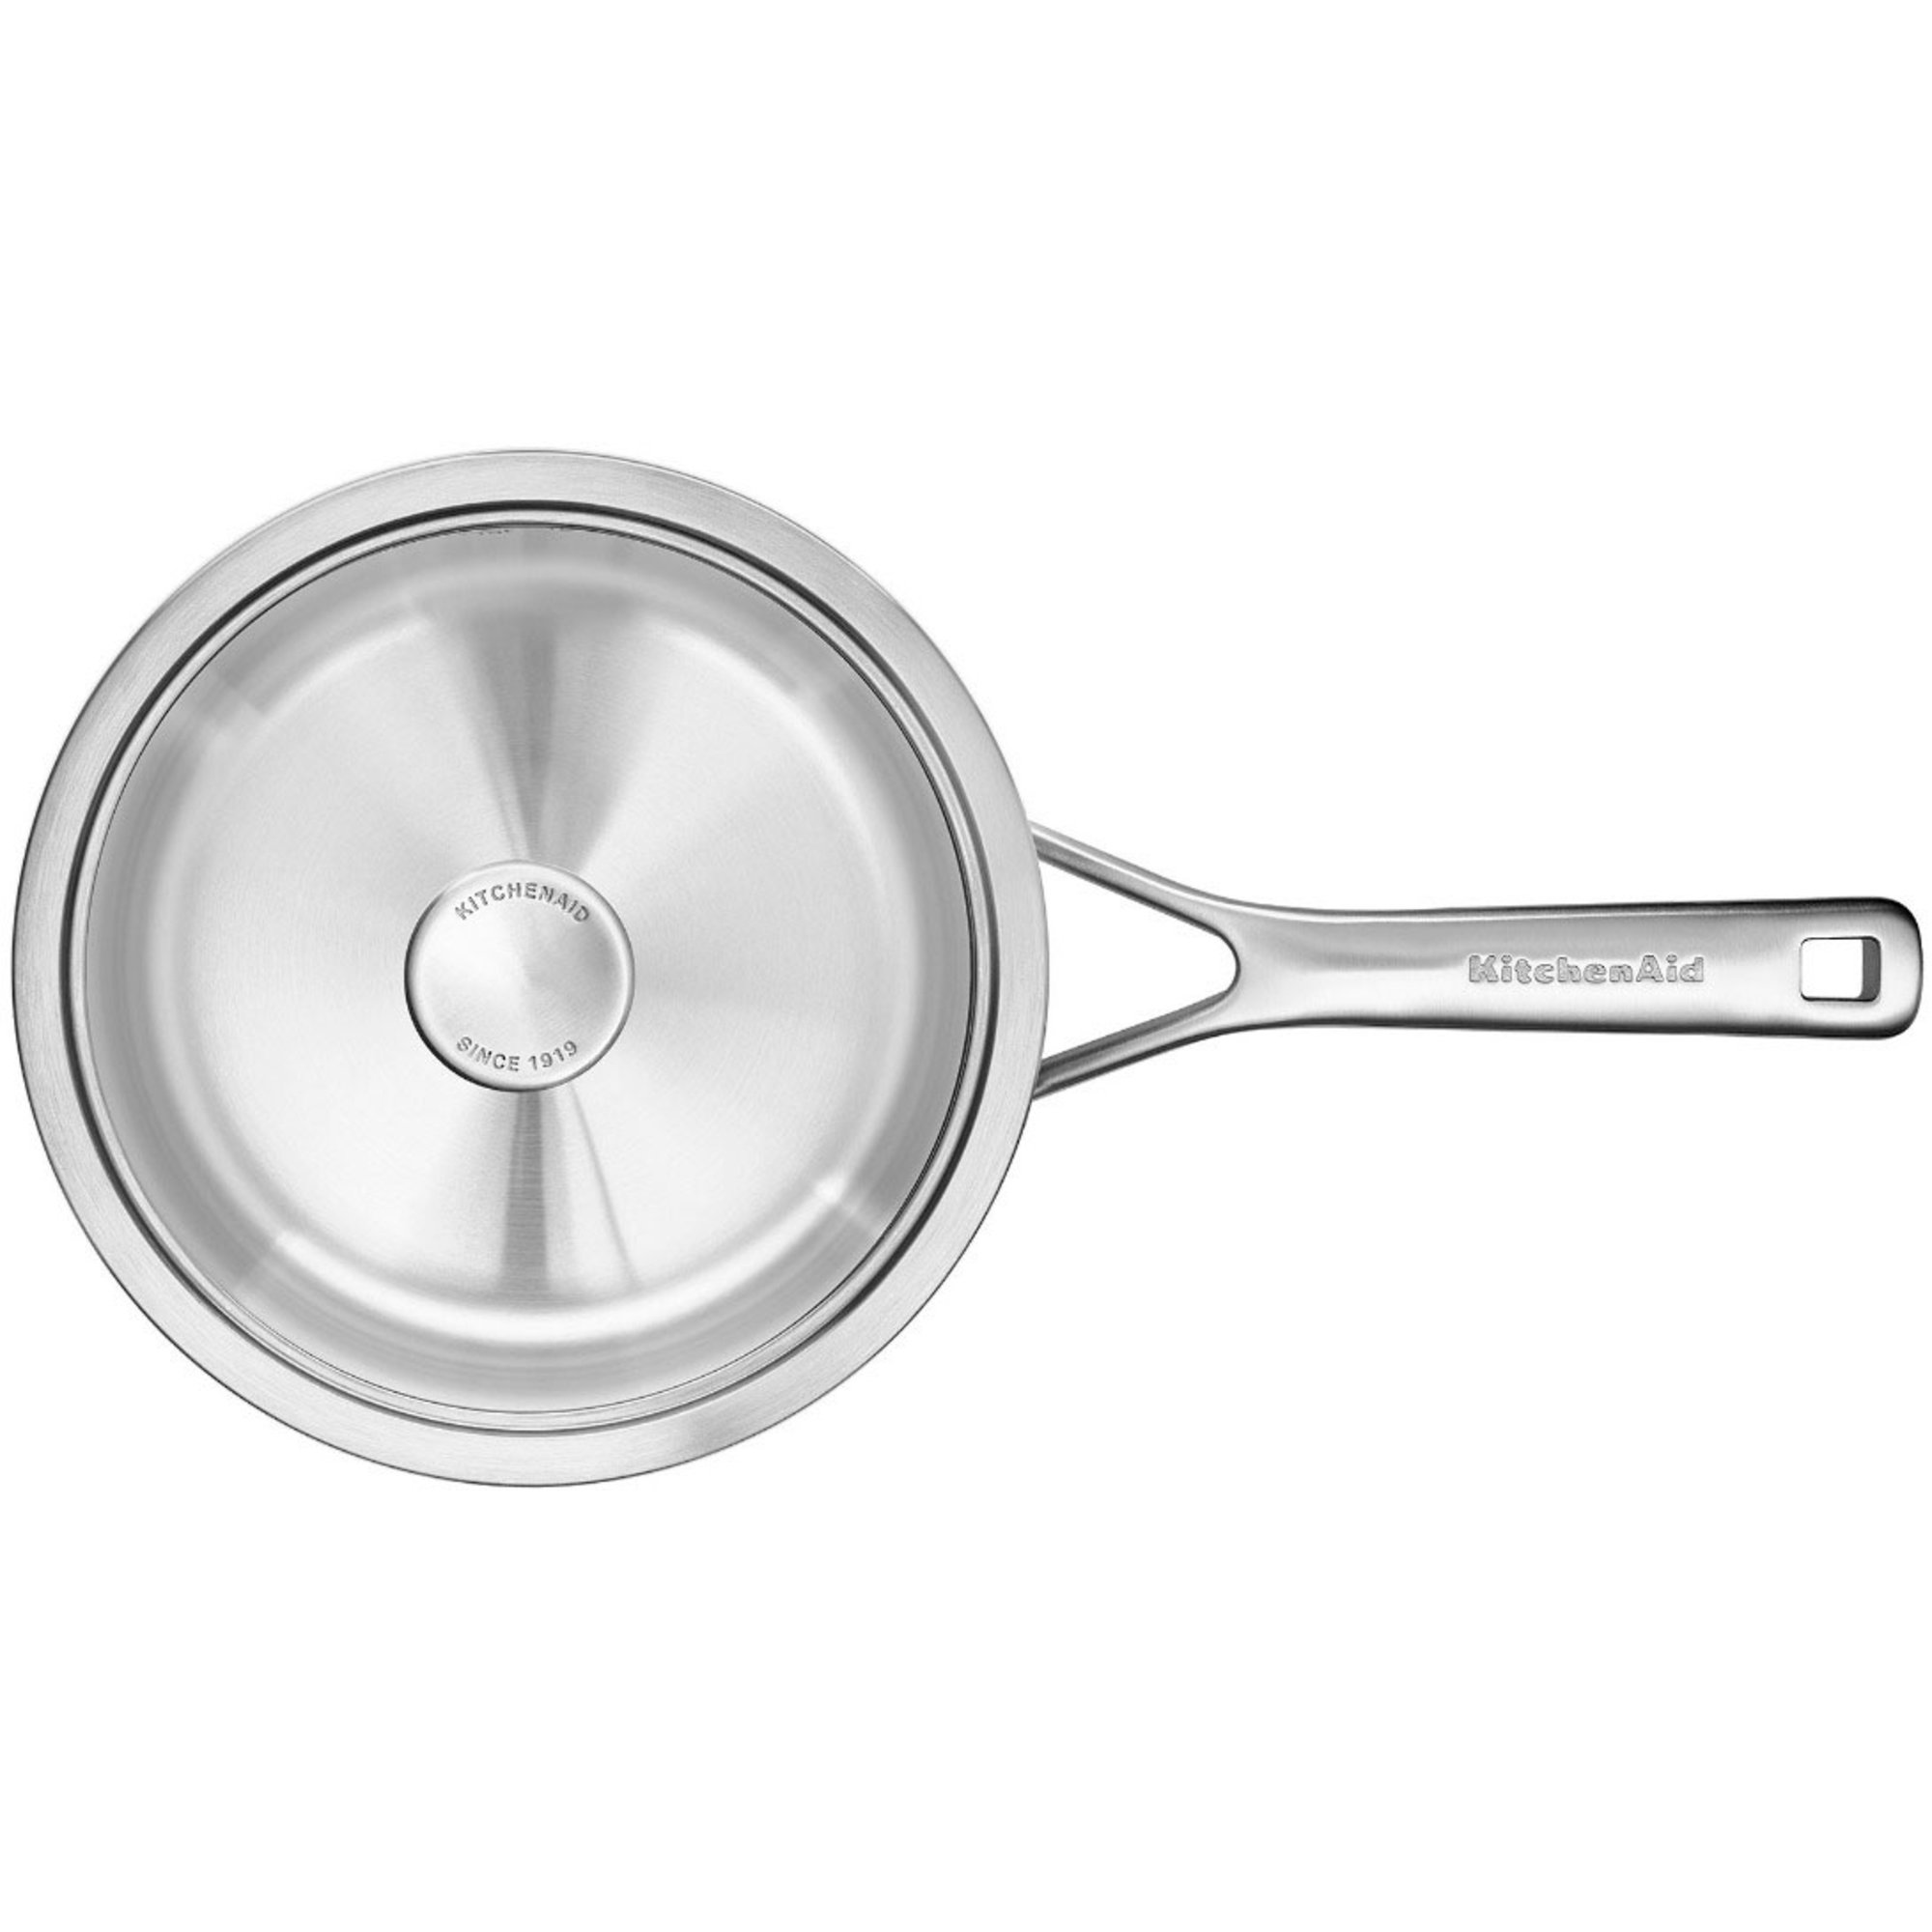 KitchenAid Cookware Collection sautepanna m/lock